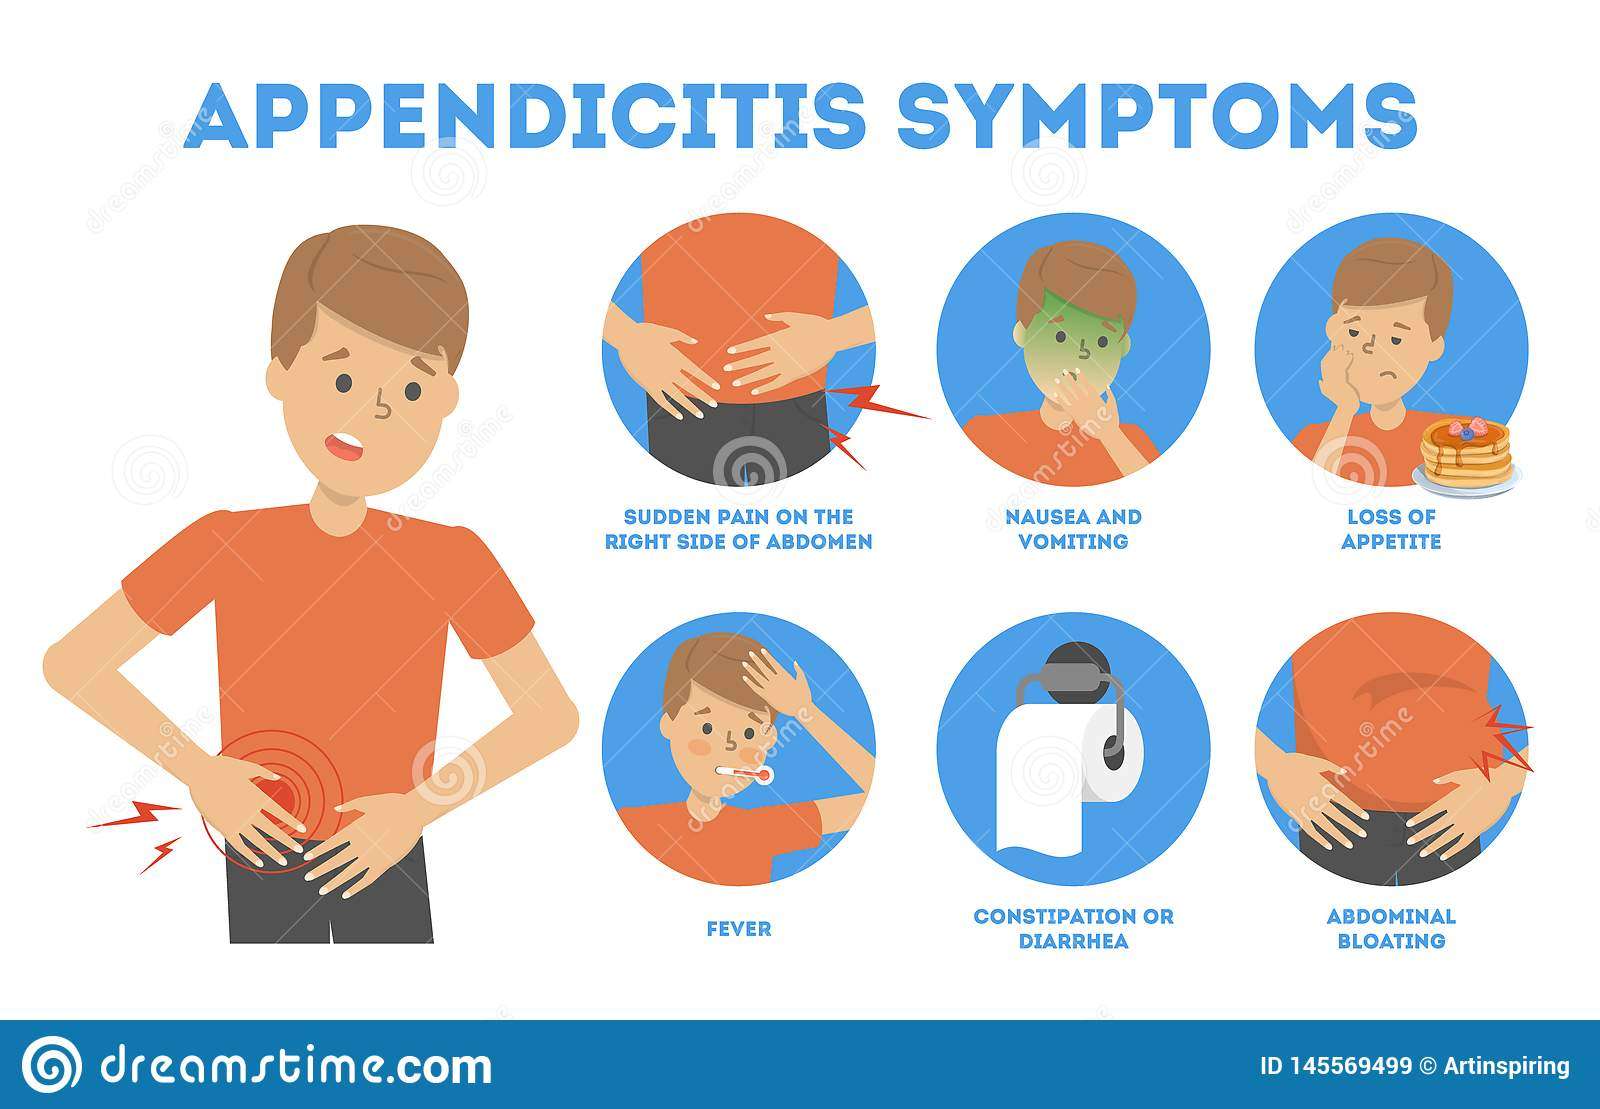 Appendicitis Symptoms Infographic. Abdominal Pain, Diarrhea And ...